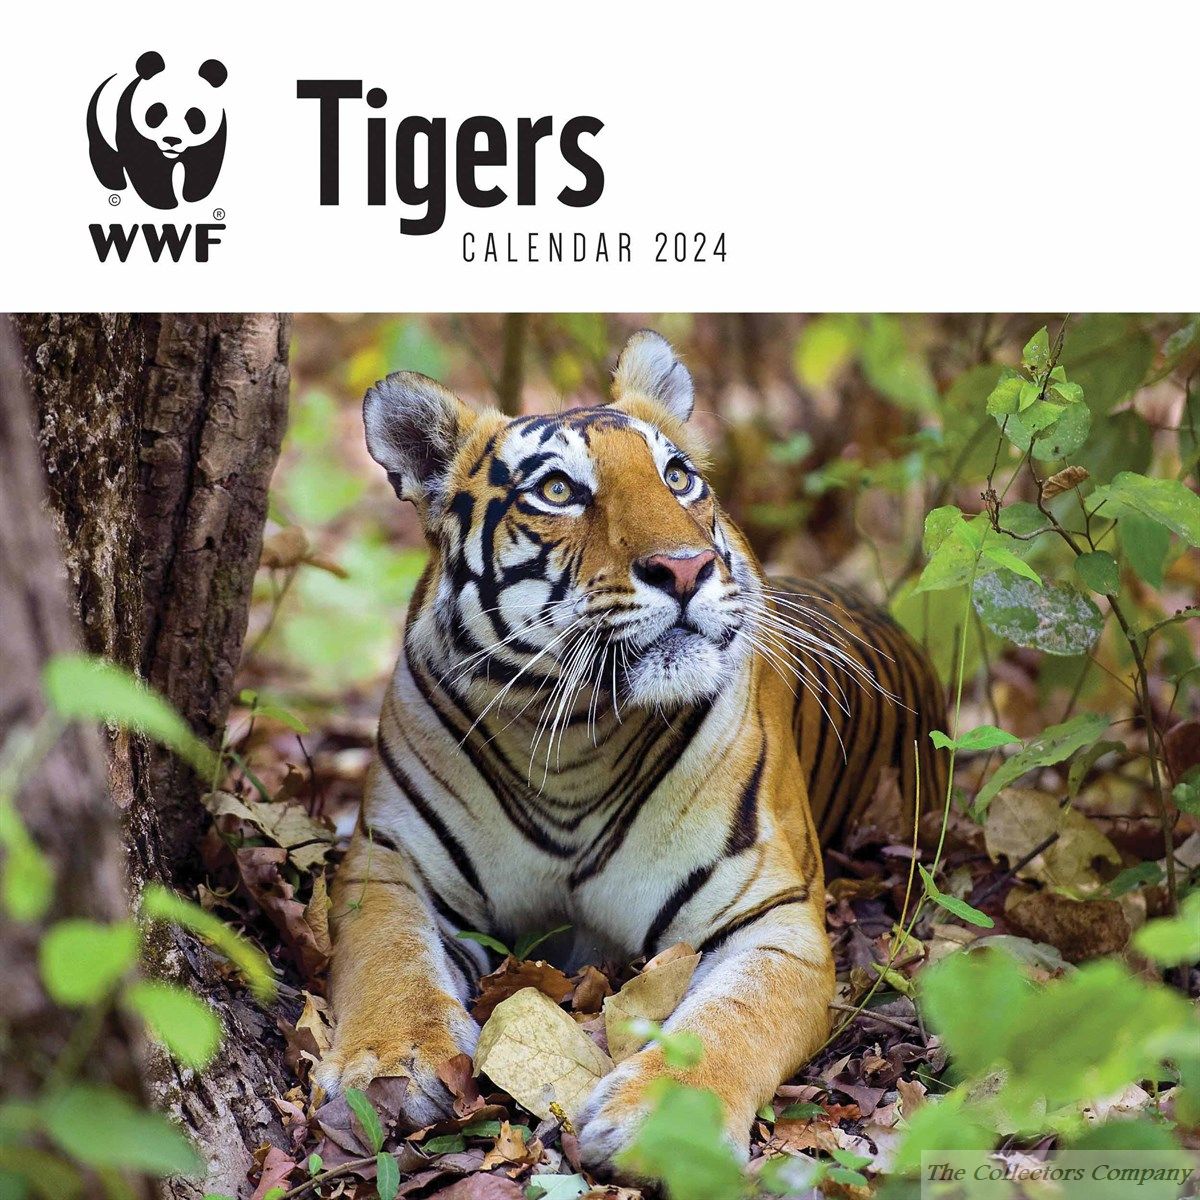 WWF Tigers 2024 Calendar 240249